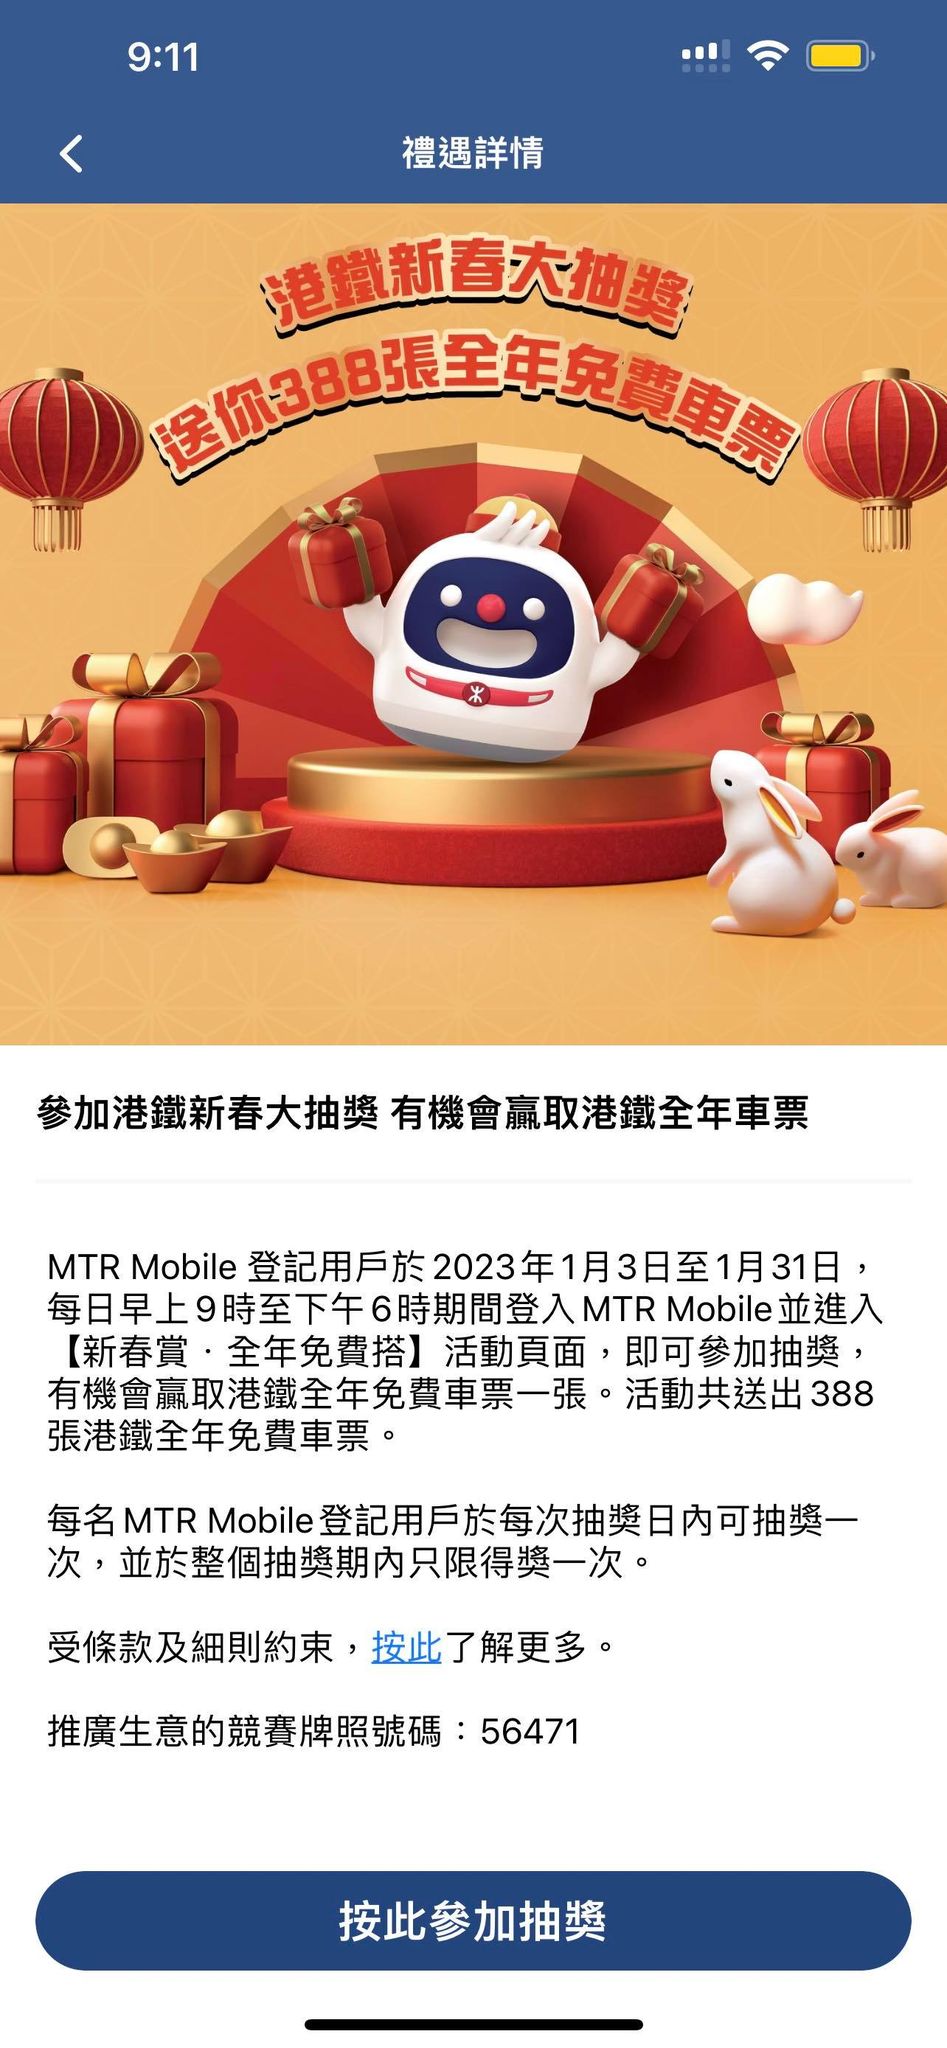 每名MTR Mobile登記用戶於每次抽奬日內可抽獎一次。MTR Mobile 截圖